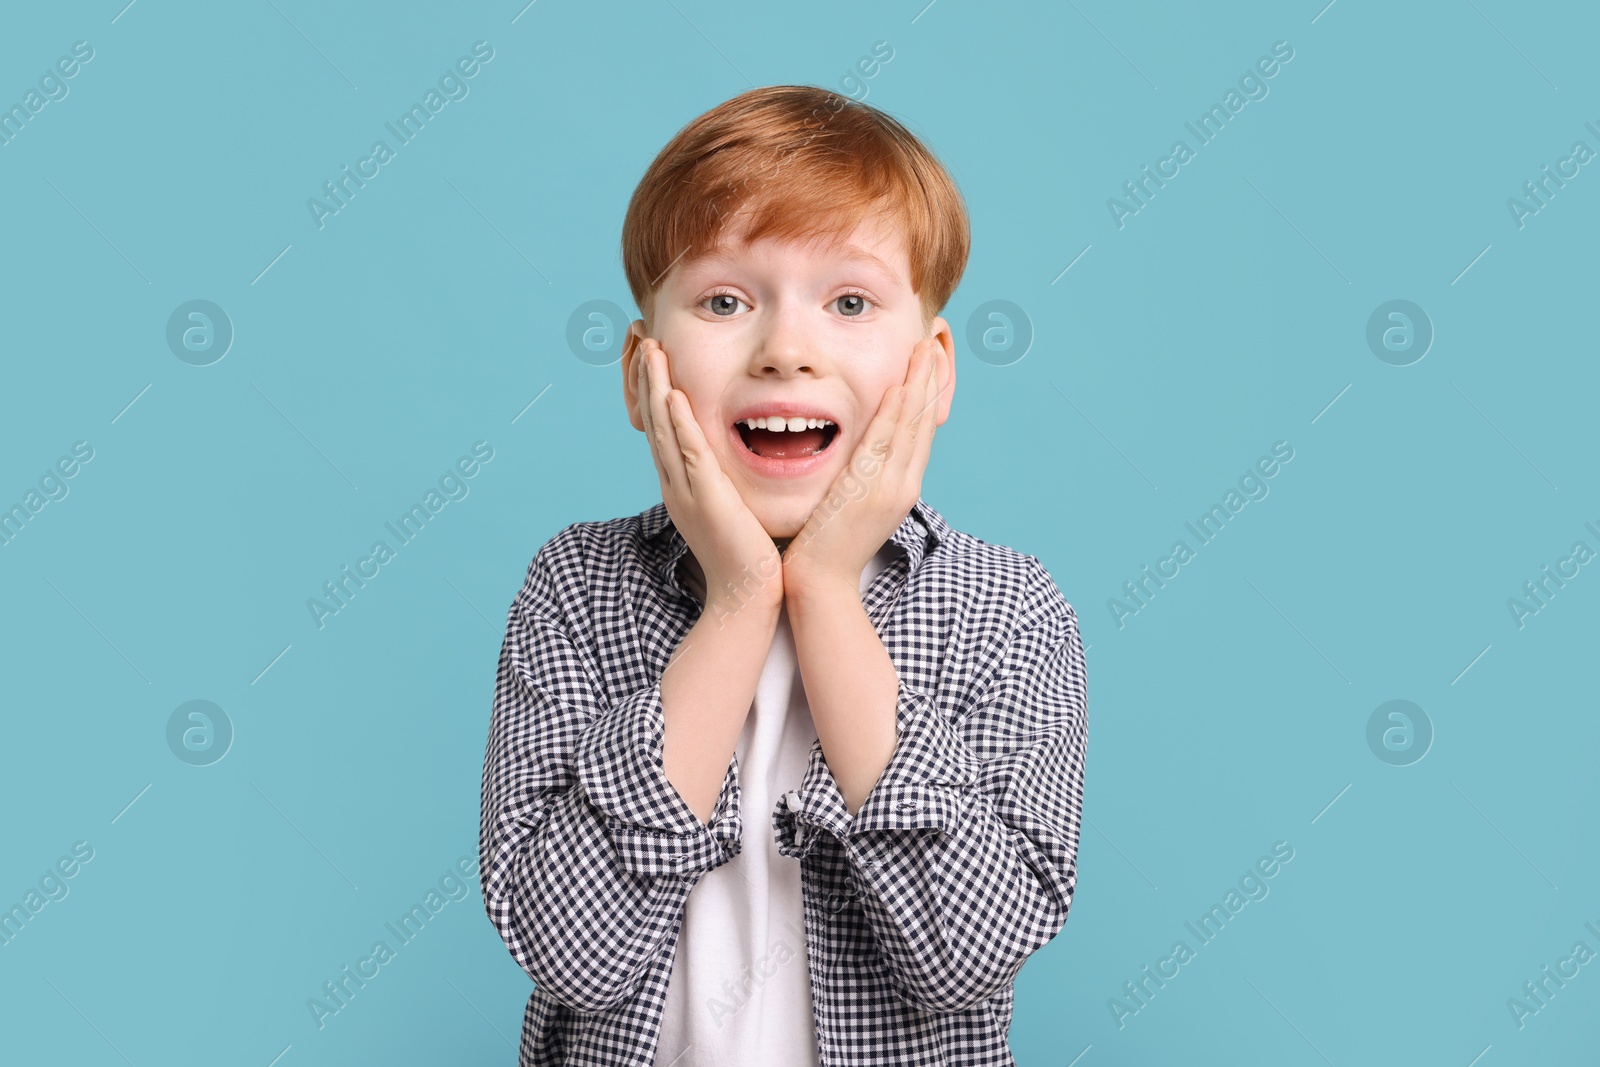 Photo of Surprised little boy on light blue background